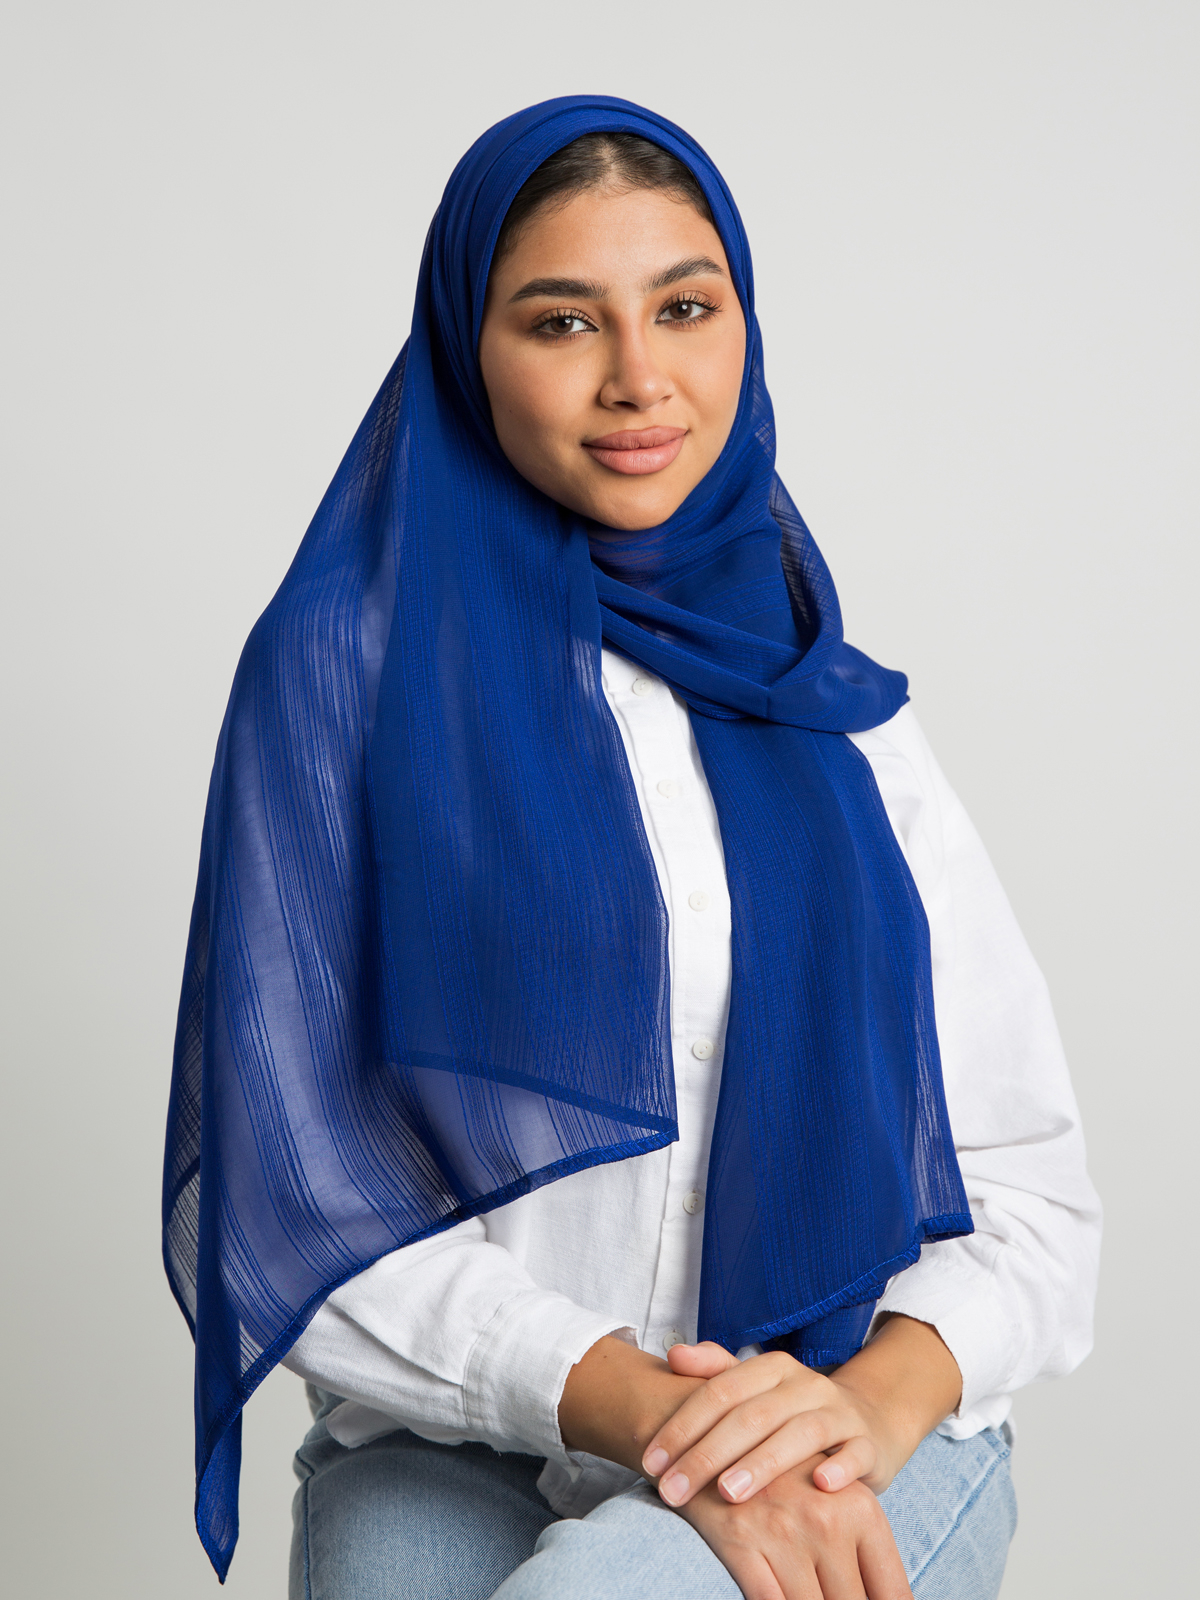 Indigo blue plain bundled stripes soft chiffon laser tarha by kaafmeem hijab for daily wear available in multiple colors